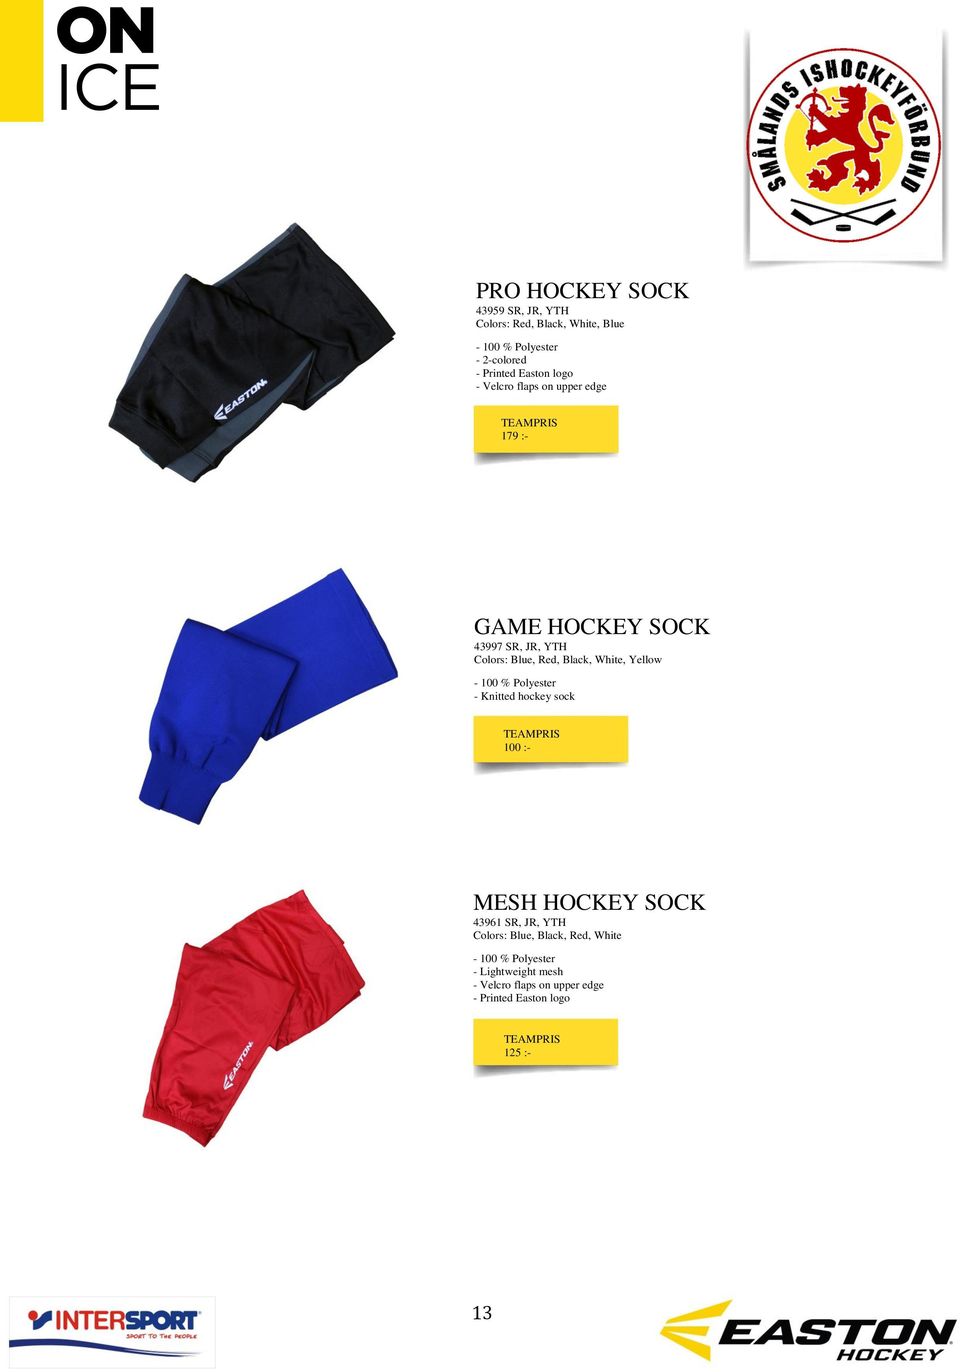 Black, White, Yellow - Knitted hockey sock 100 :- MESH HOCKEY SOCK 43961 SR, JR, YTH Colors: